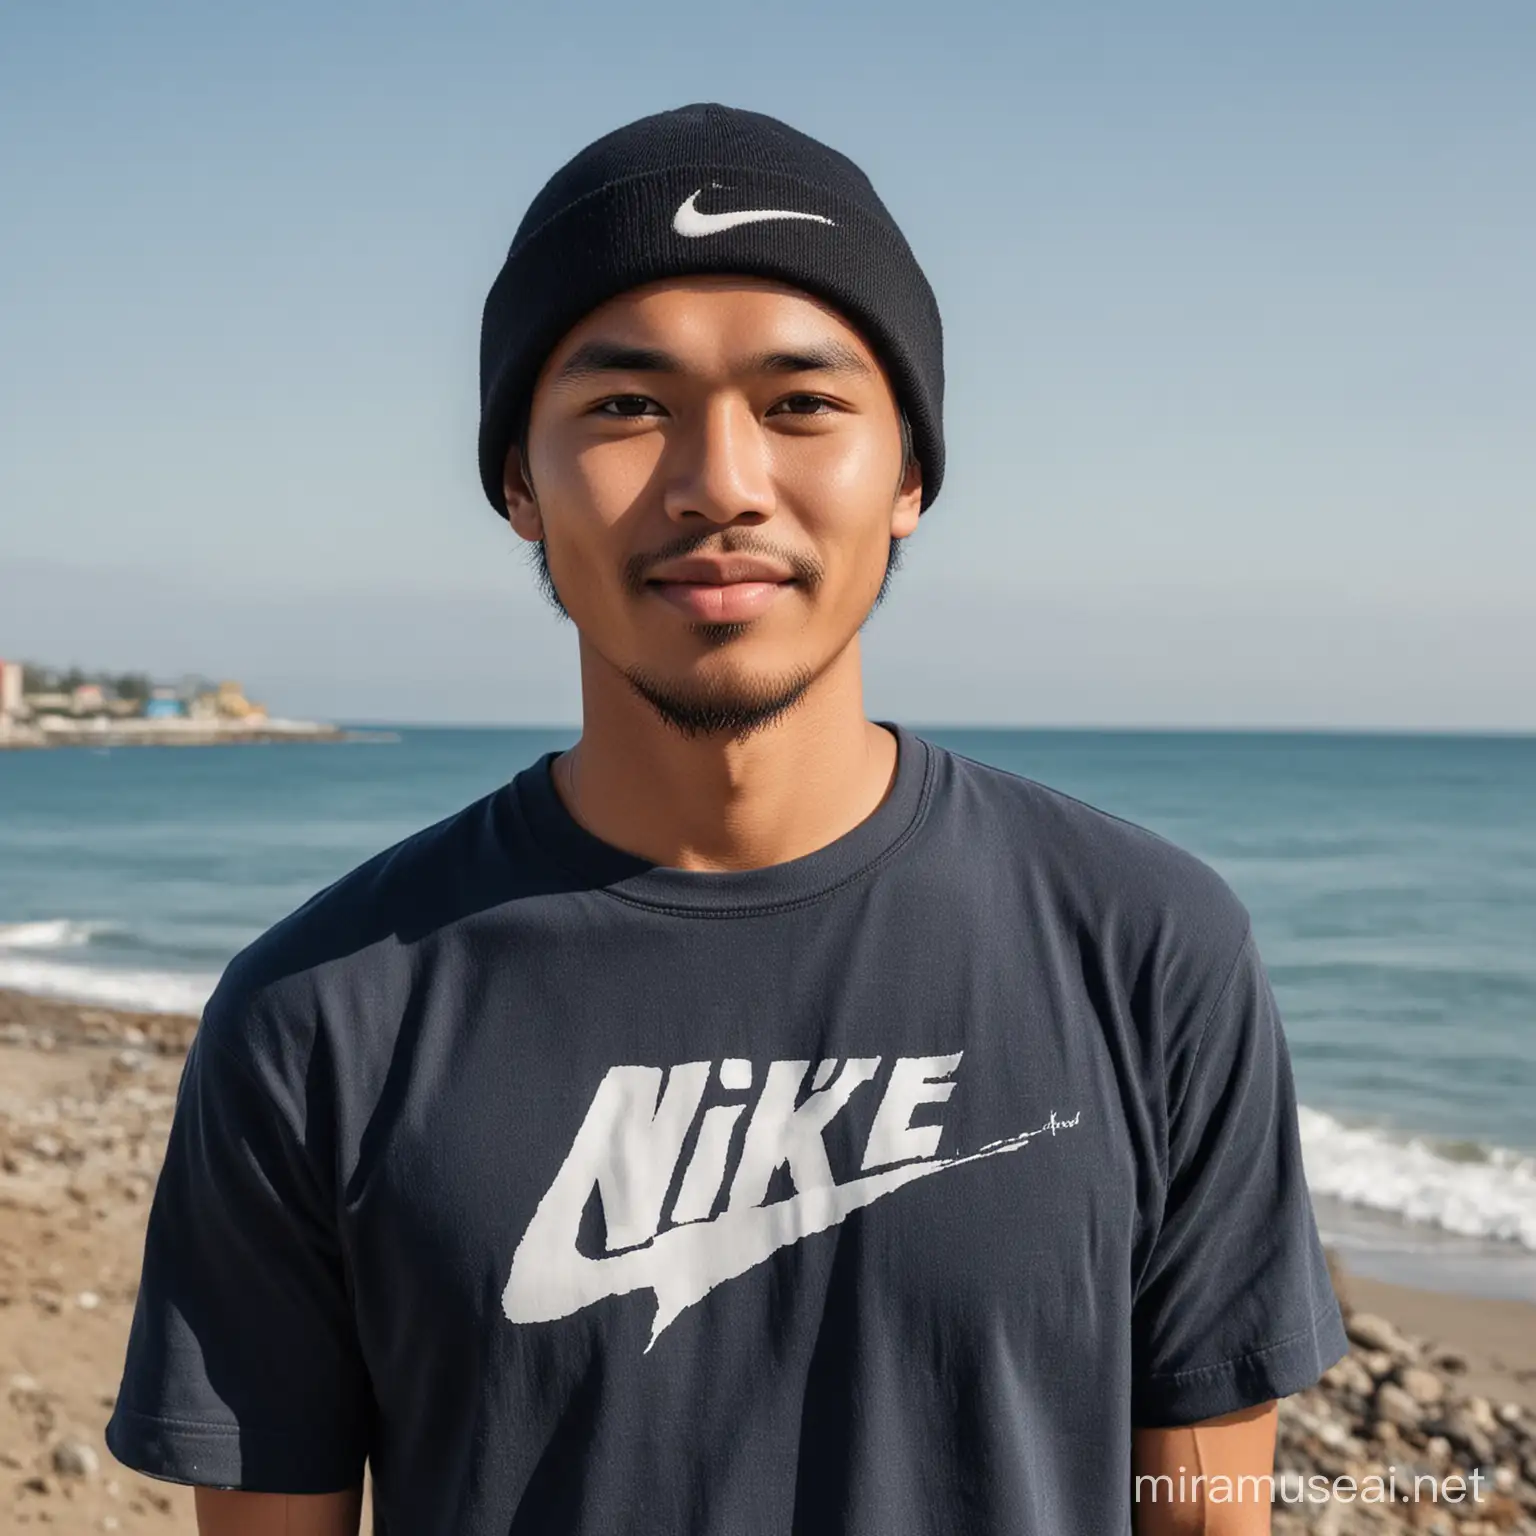 Friendly Indonesian Man Wearing Nike TShirt by the Seaside